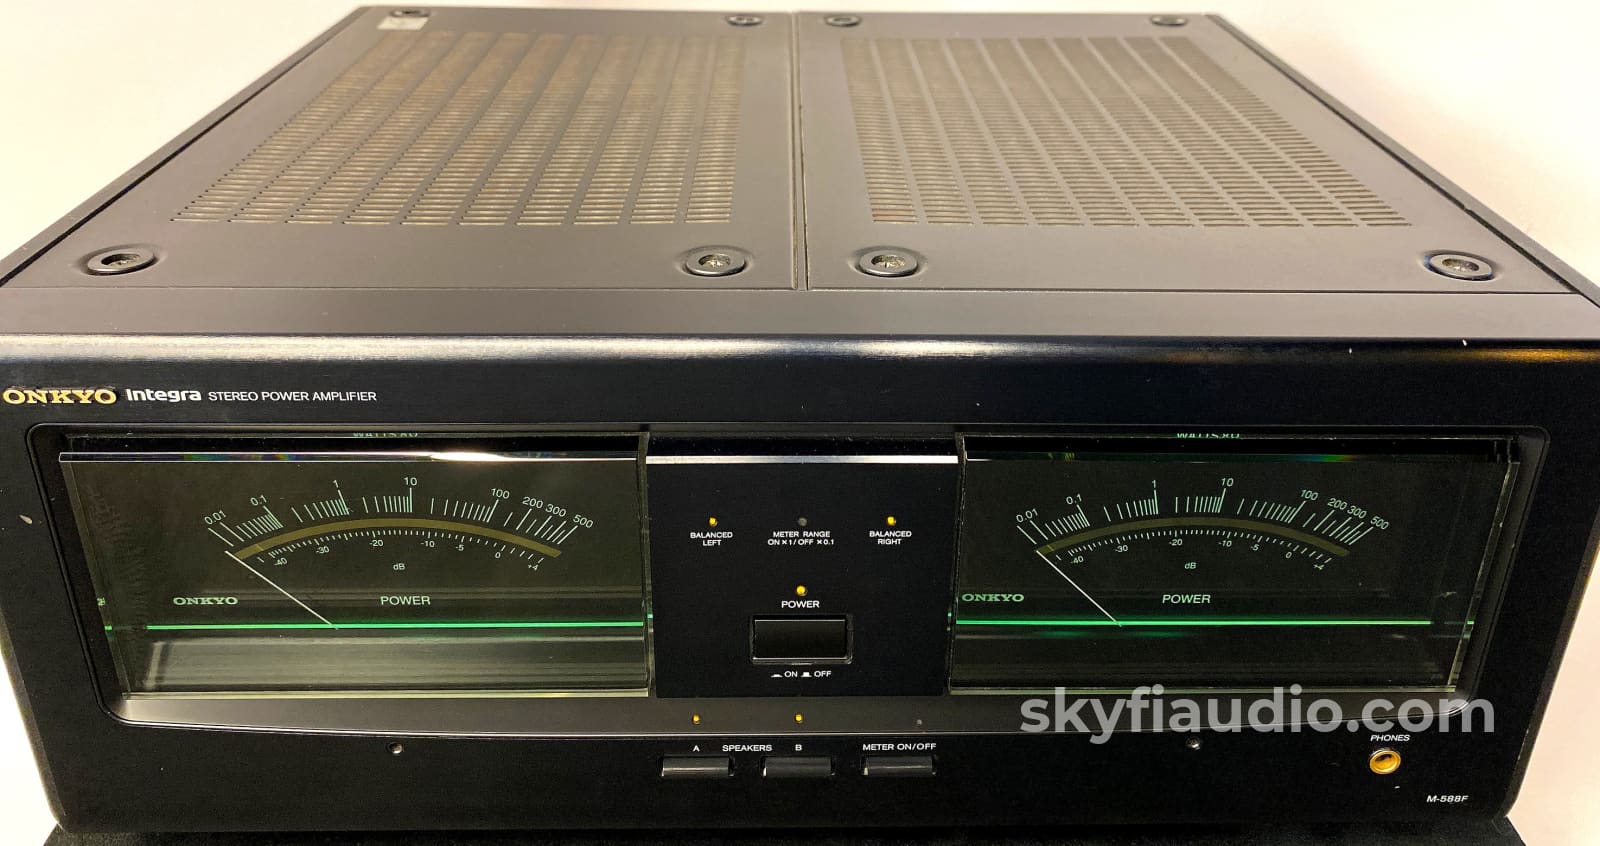 Onkyo M-588F Stereo Power Amplifier - Huge Meters Wow 200Wpc